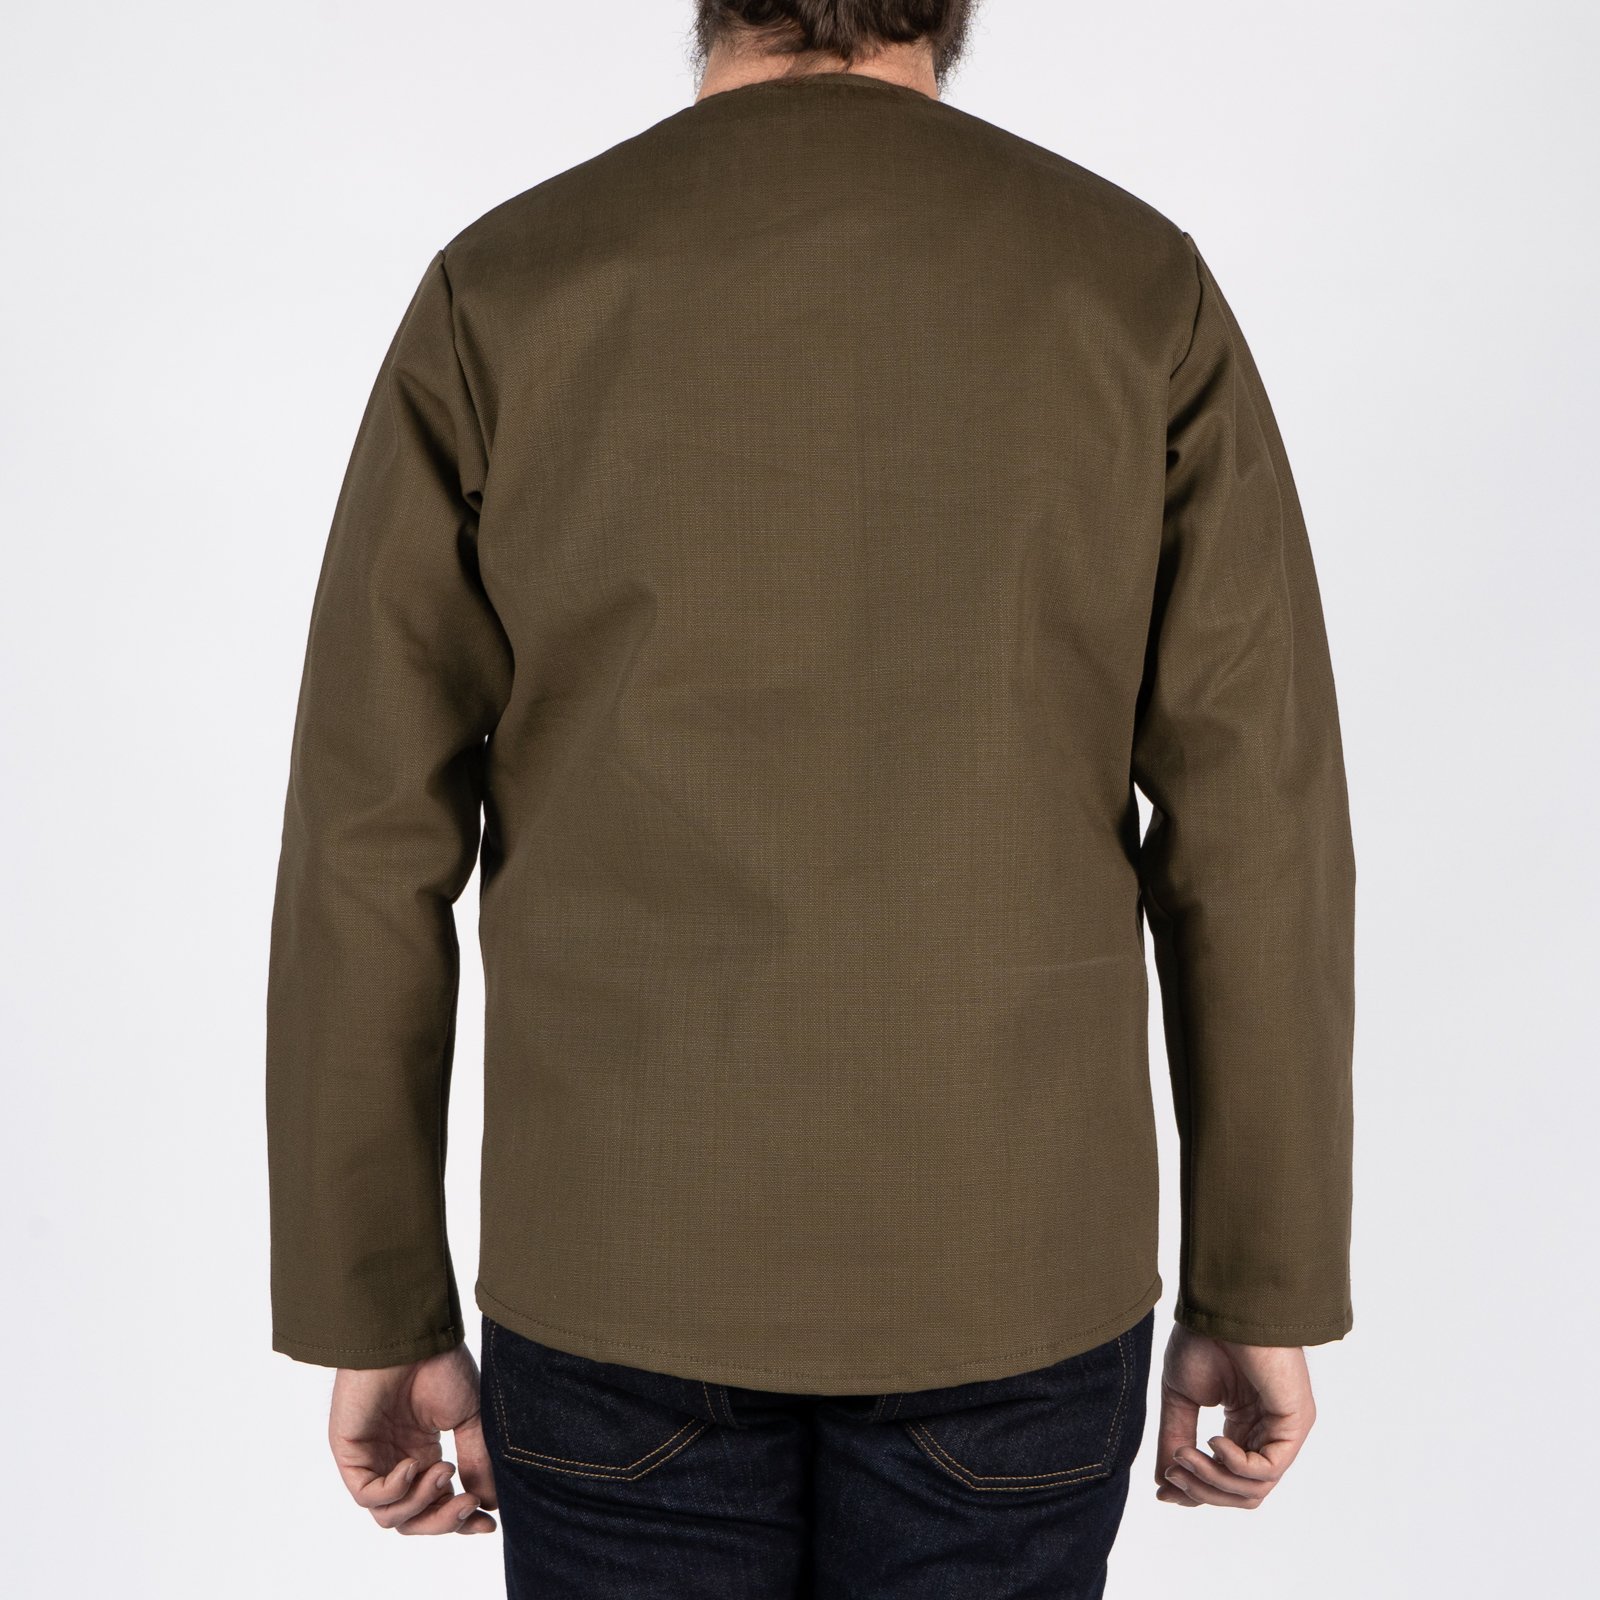  Smart Jacket - Raw Cotton Canvas - Olive - back 